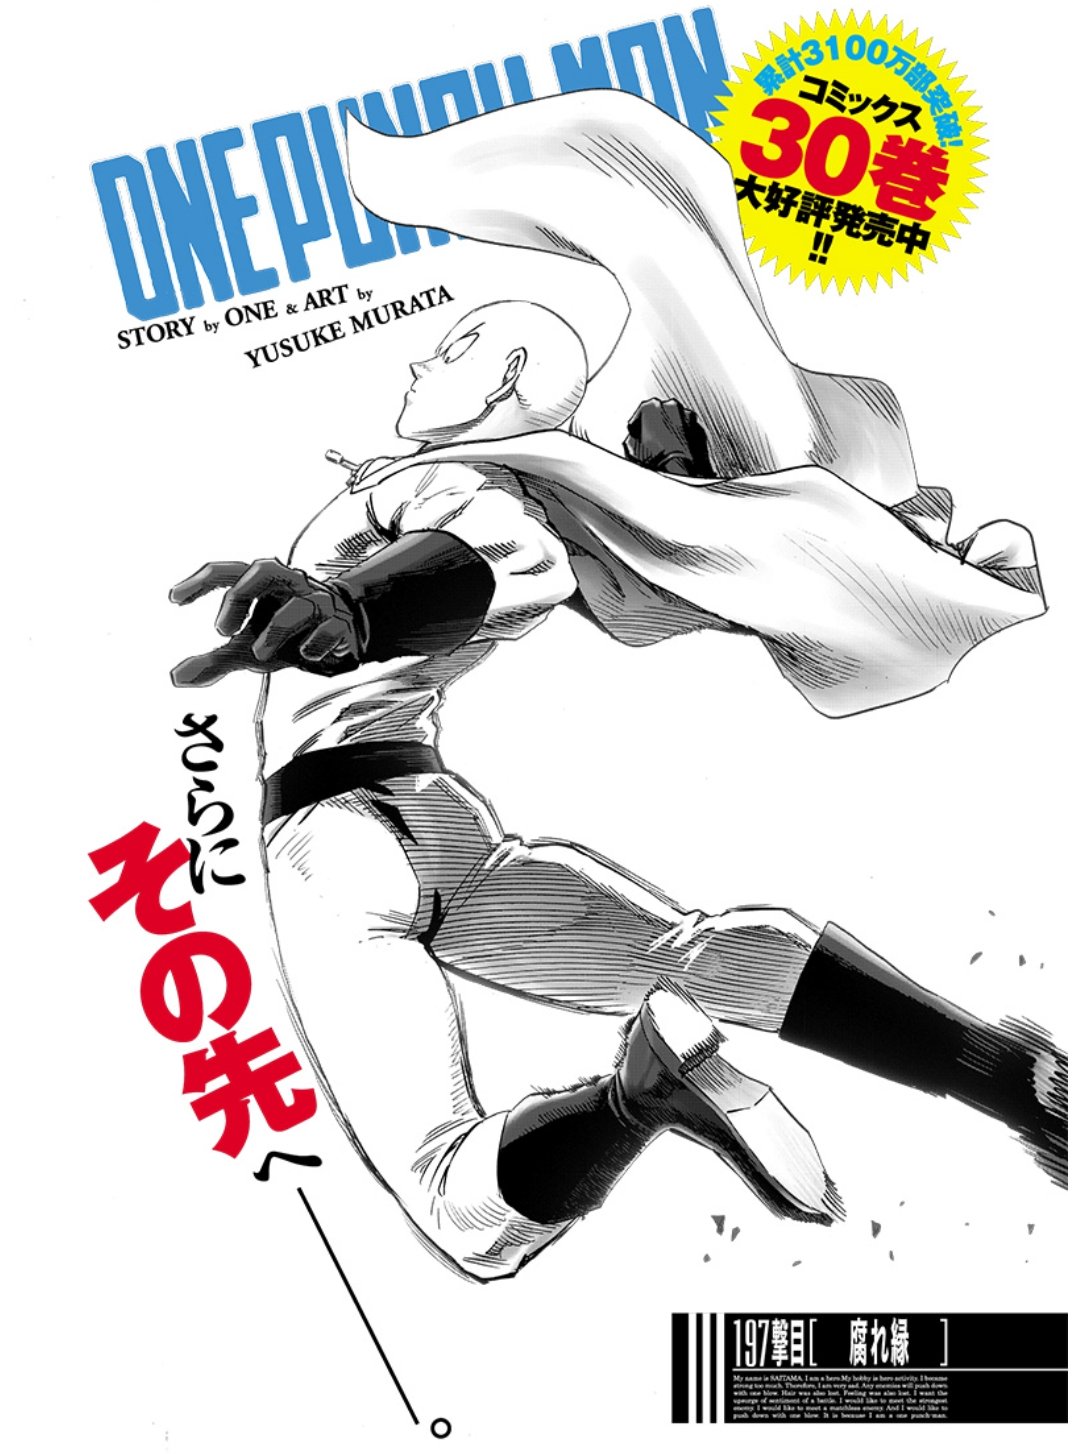 [One Punch Man] Manga capítulo 199/244 redraw GMgIh9WXkAAzuAv?format=jpg&name=large